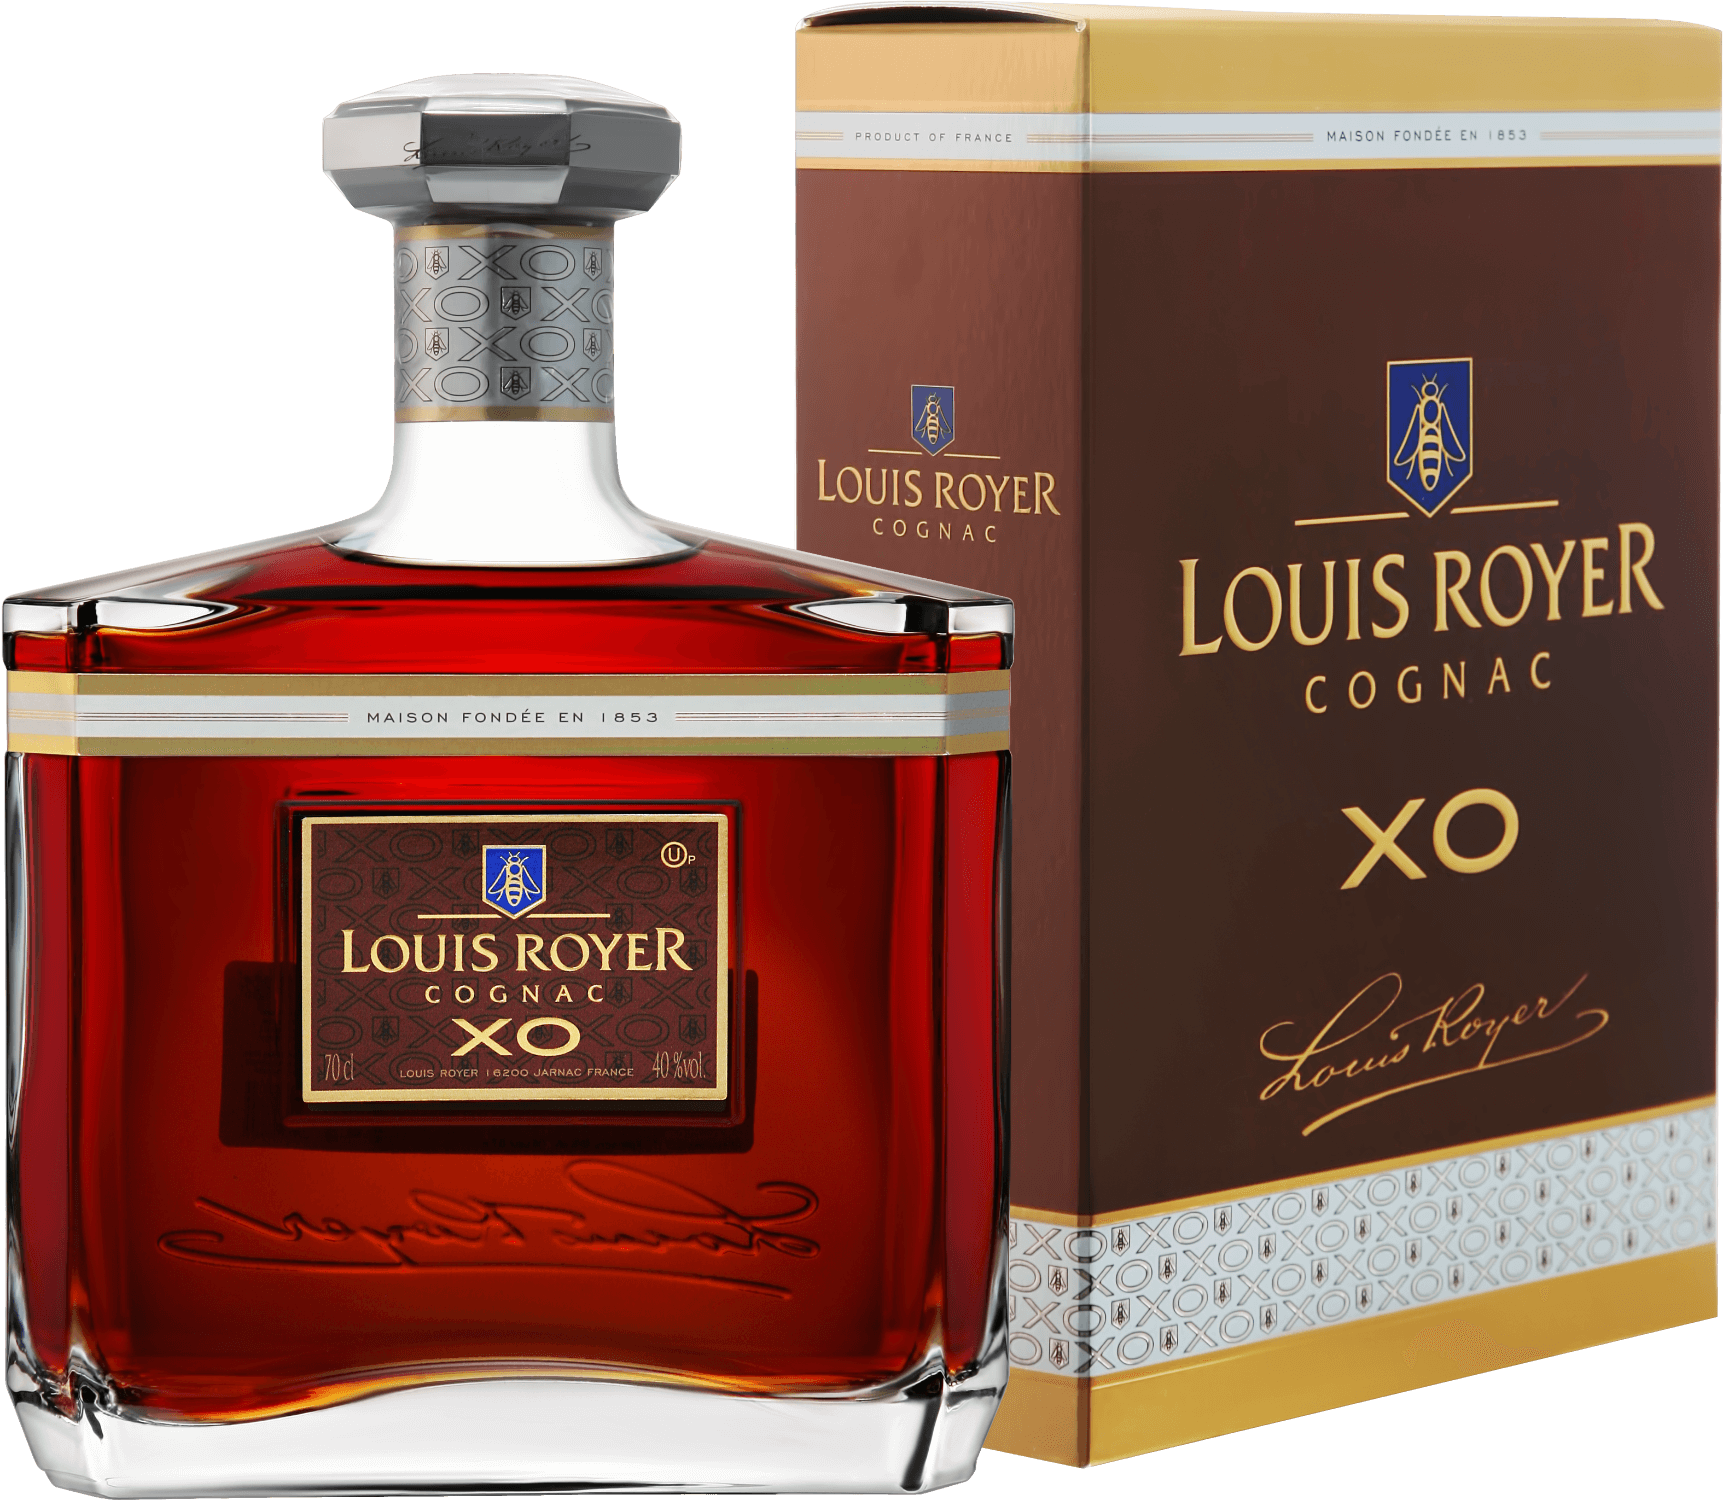 louis royer cognac xo gift box Louis Royer Cognac XO Kosher (gift box)